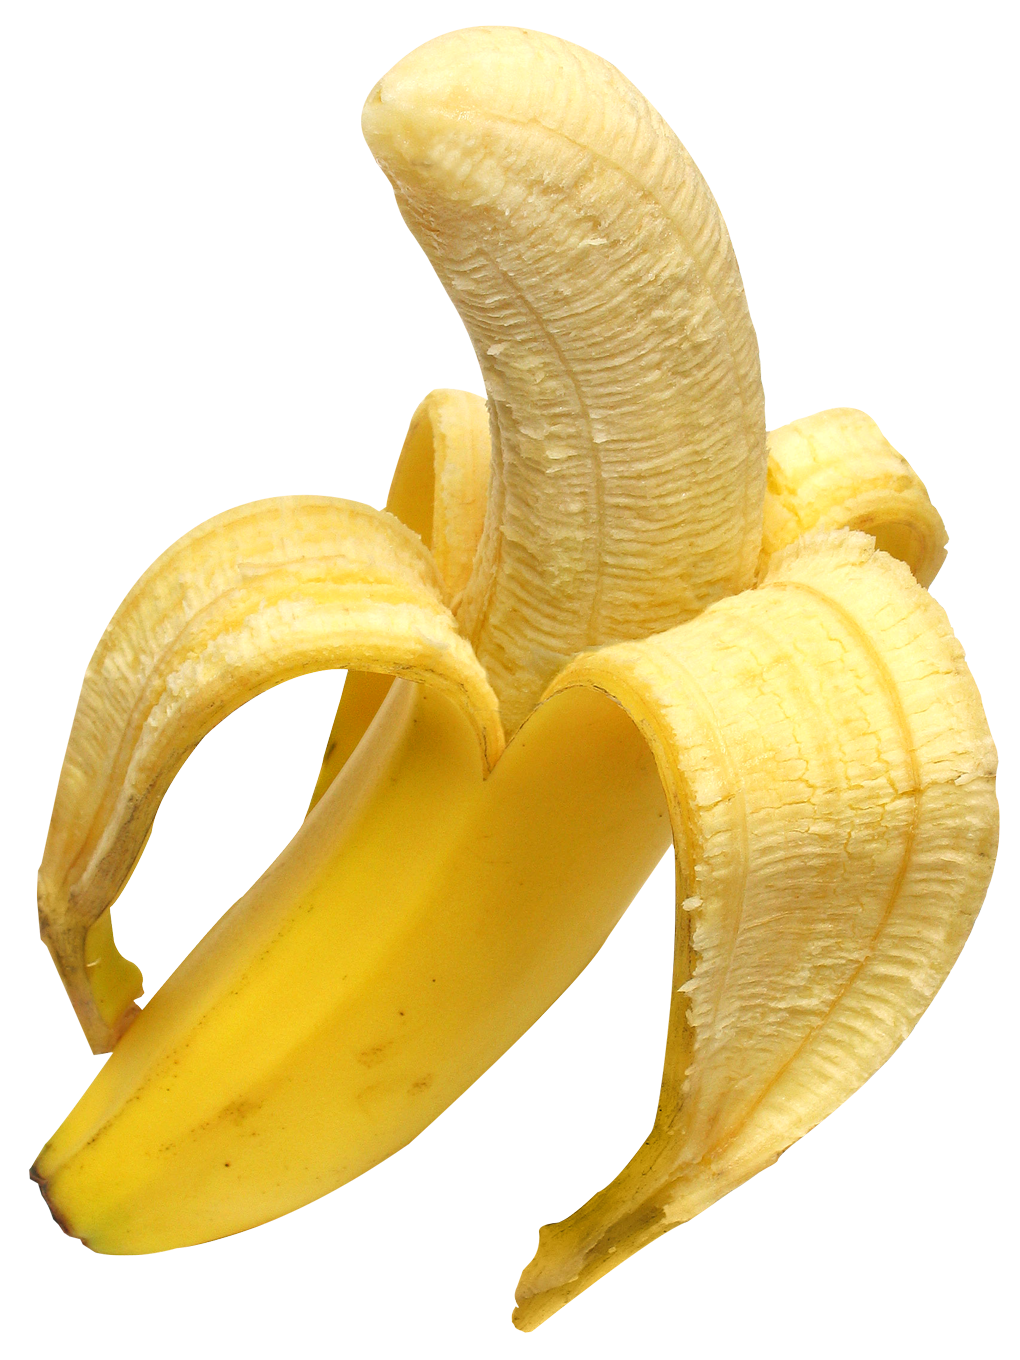 Banana open